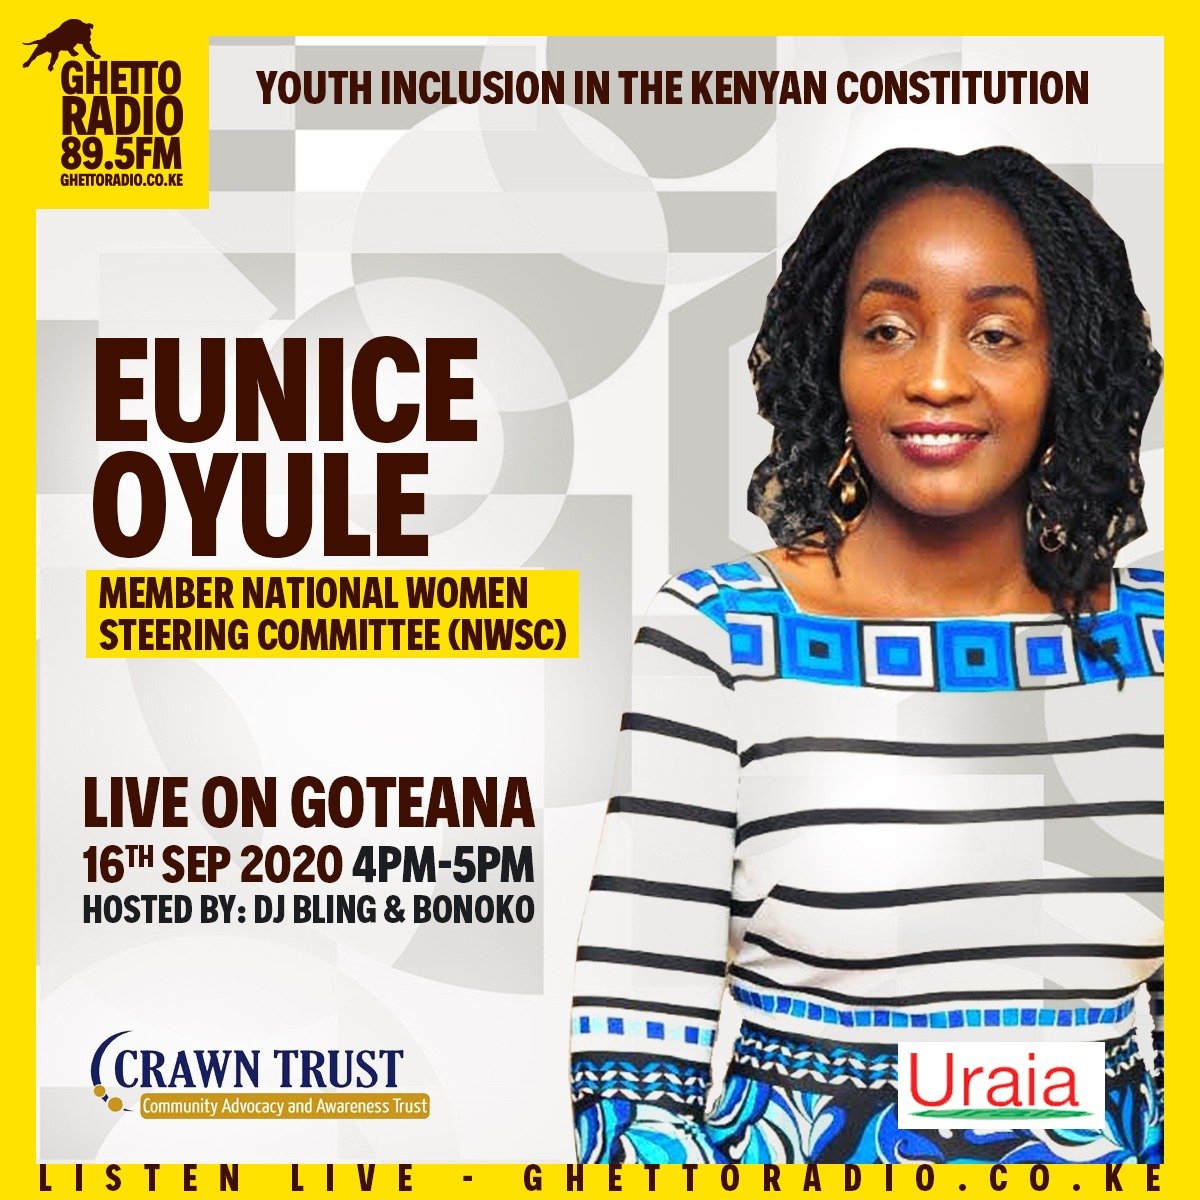 Mtaani kama yout unafeel uko involved in the Kenyan Constitution? 

Tuchapiane this and more w/ @crawntrustkenya crew on #Goteana  #womenholdingtheline